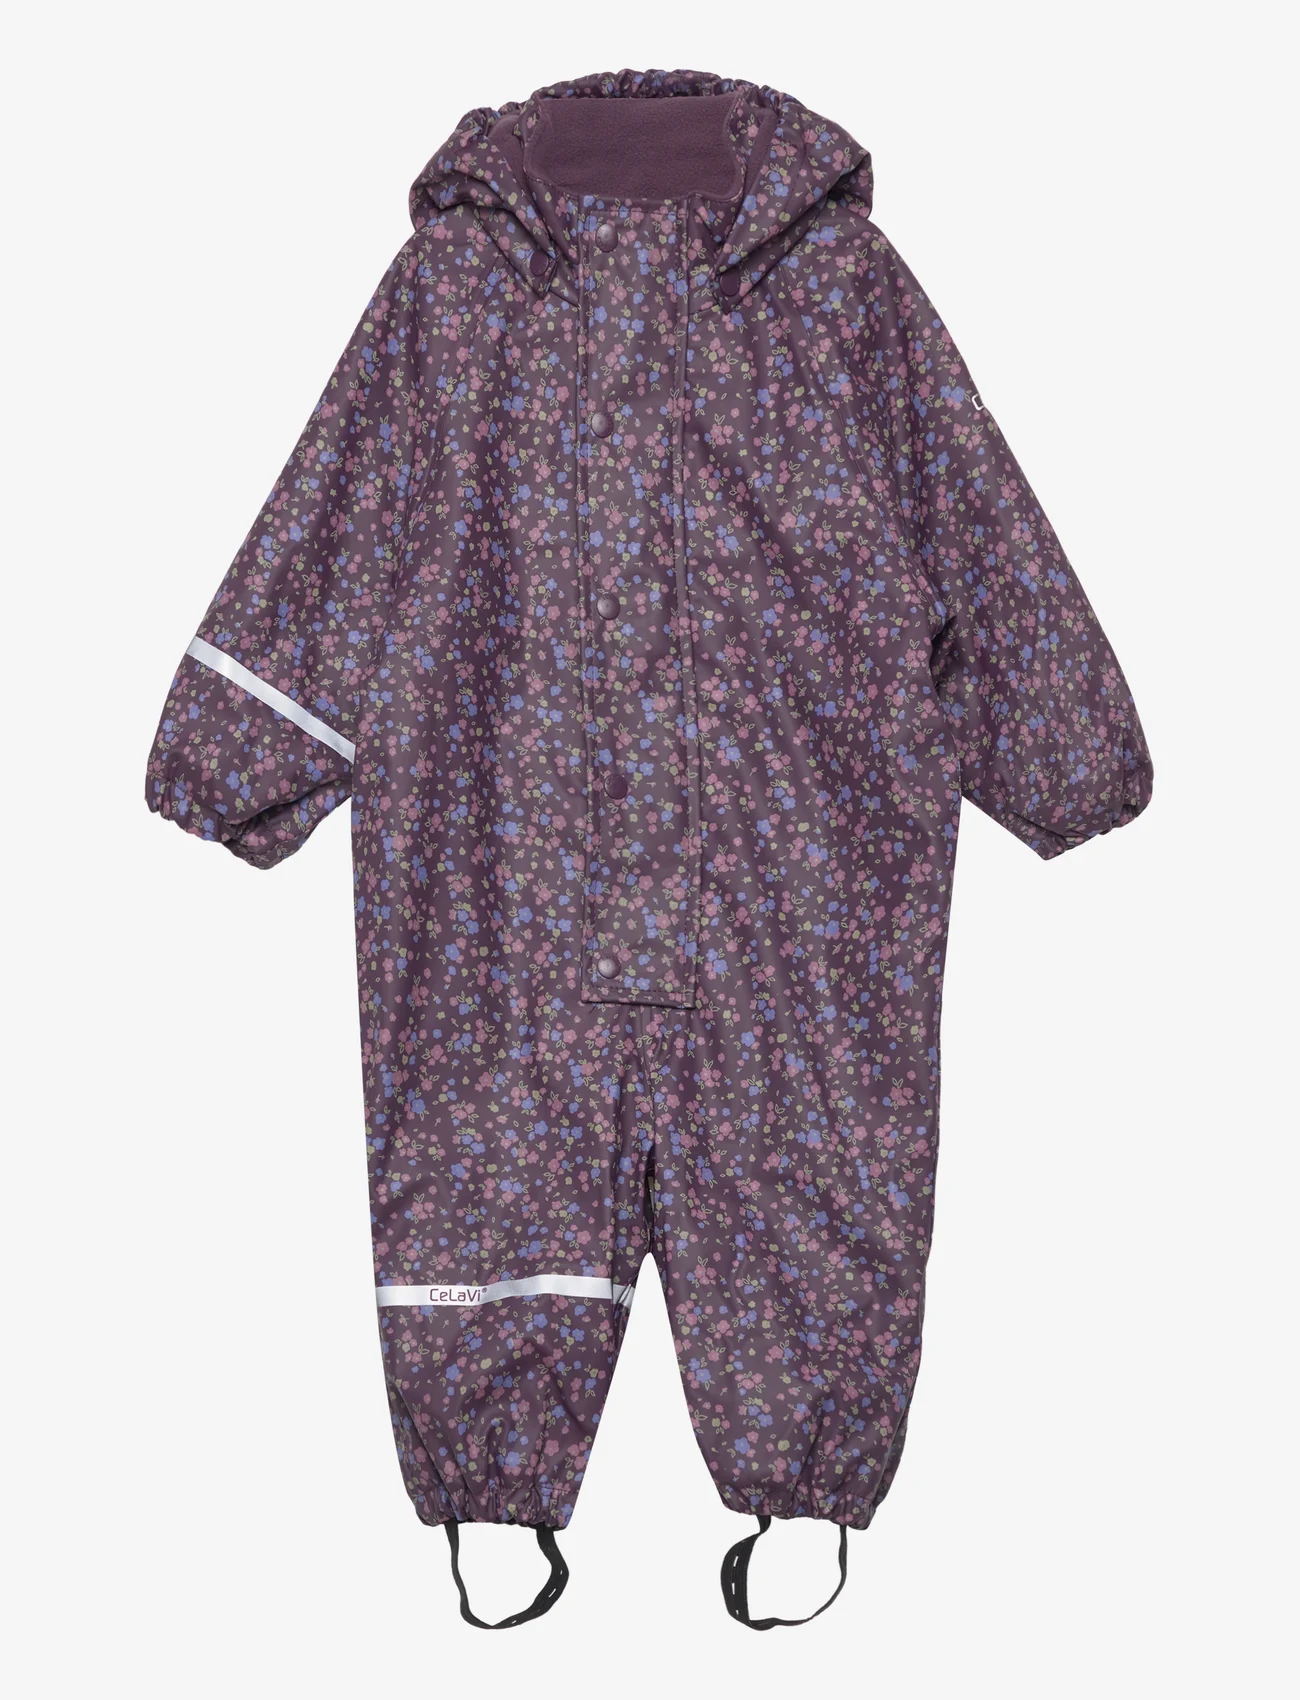 CeLaVi - Rainwear Suit -AOP, w.fleece - lietus valkā kombinezoni - plum perfect - 0